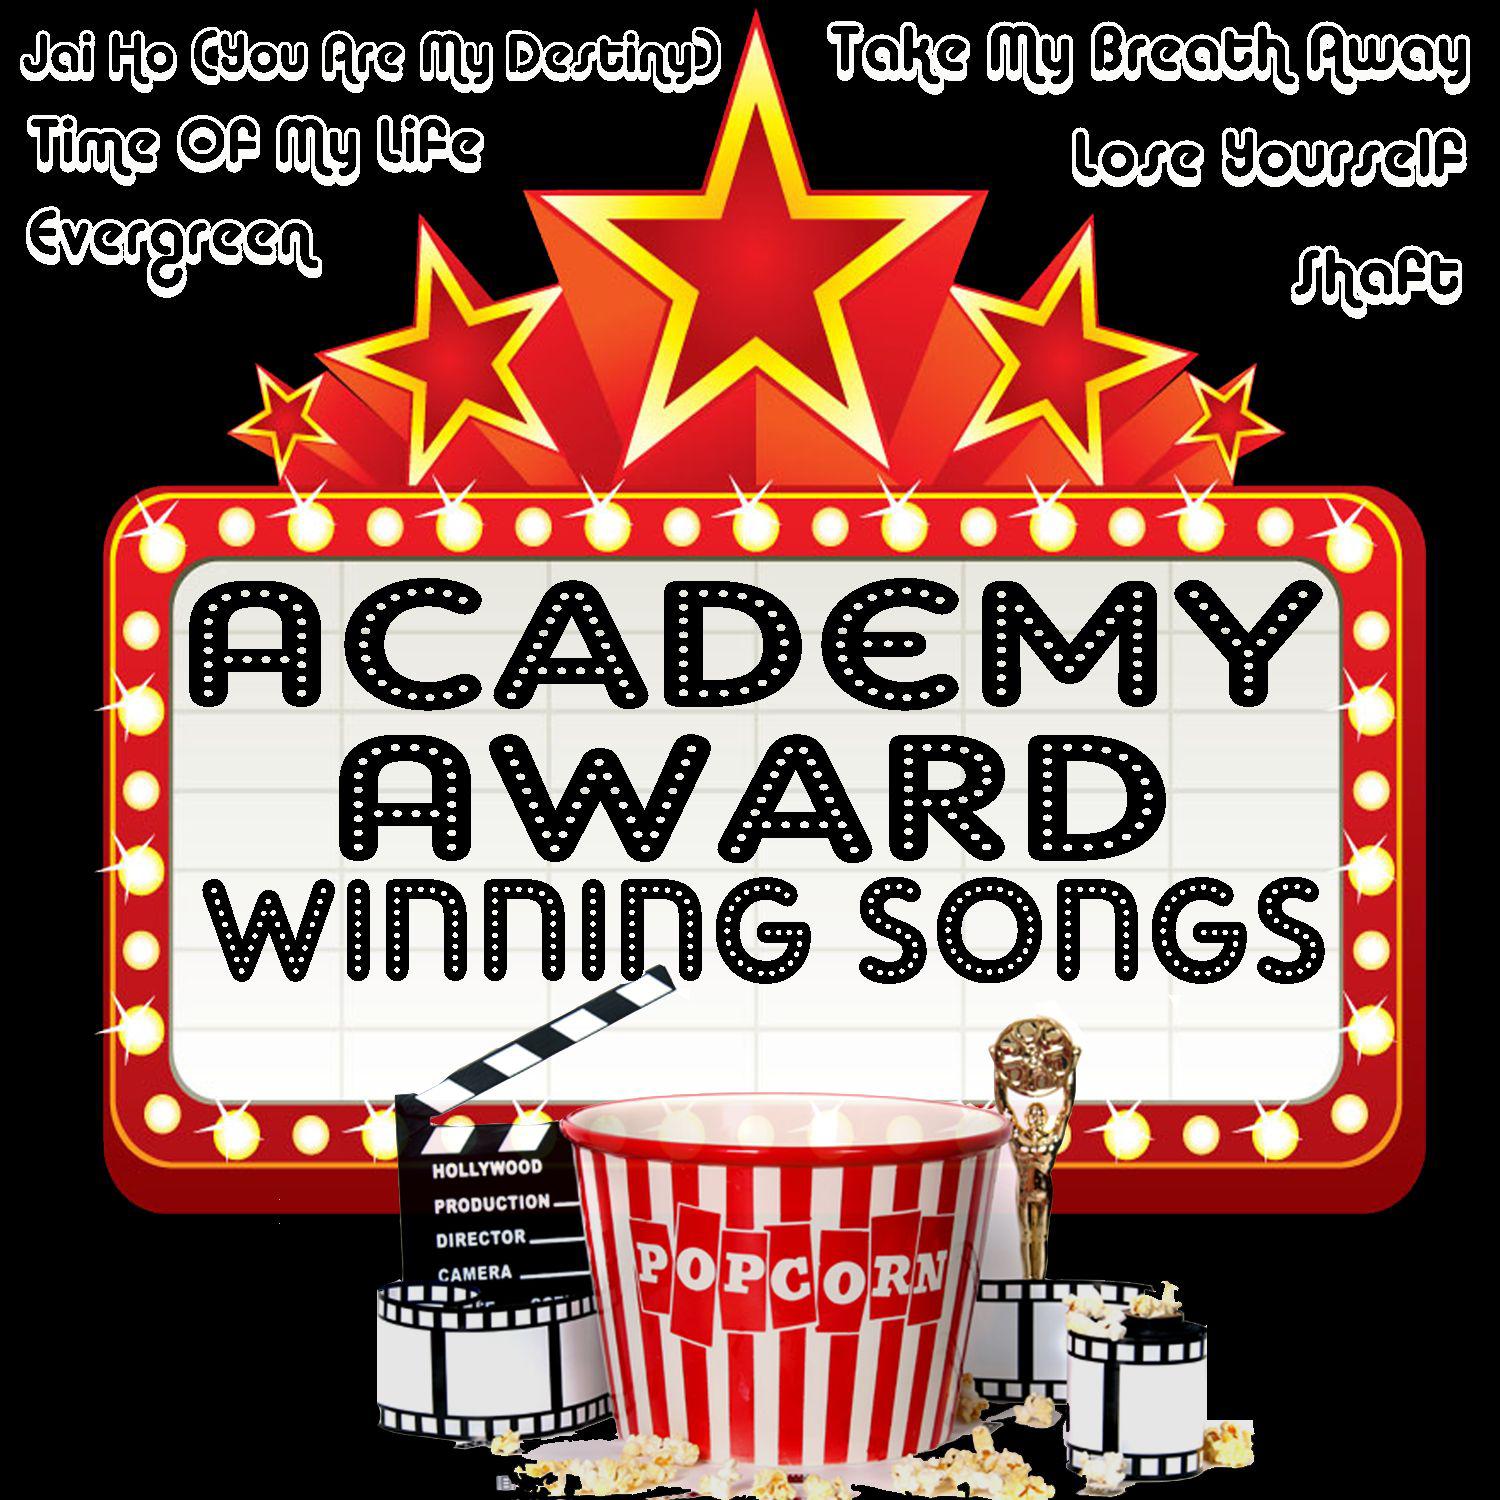 Academy Award Winning Songs